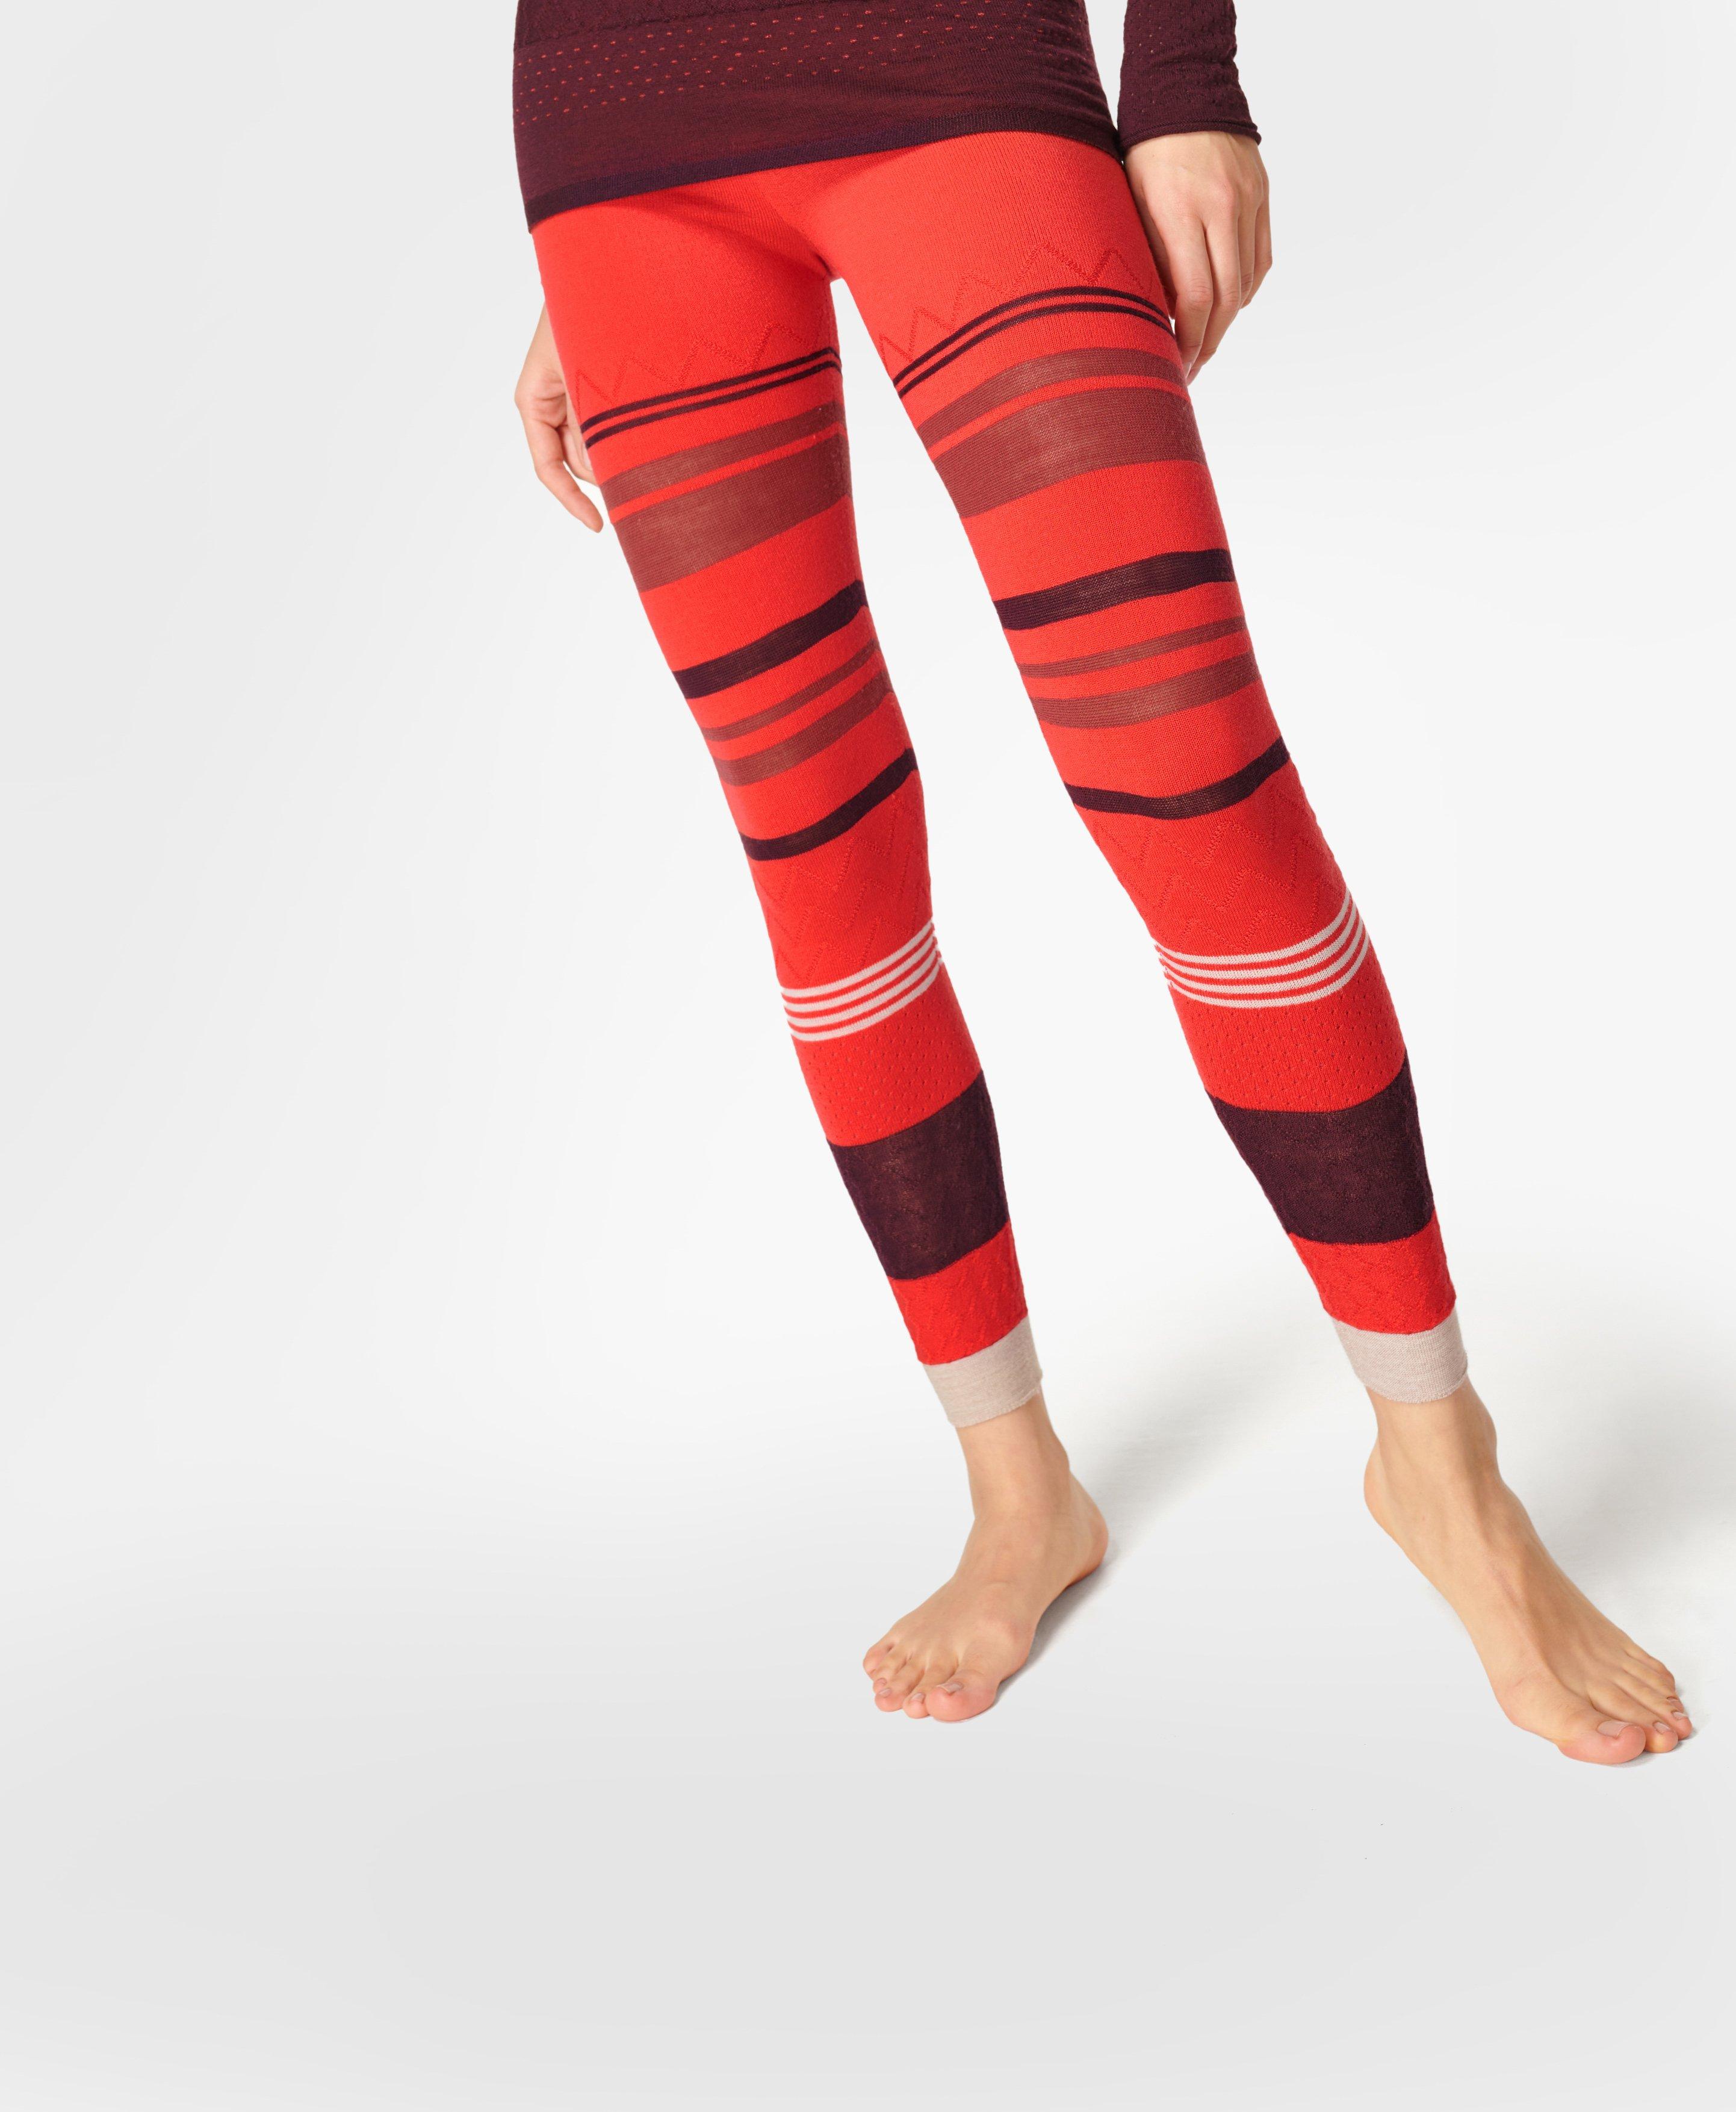 Benton Legging - Red Clay  Dress 00, Cotton spandex, Legging